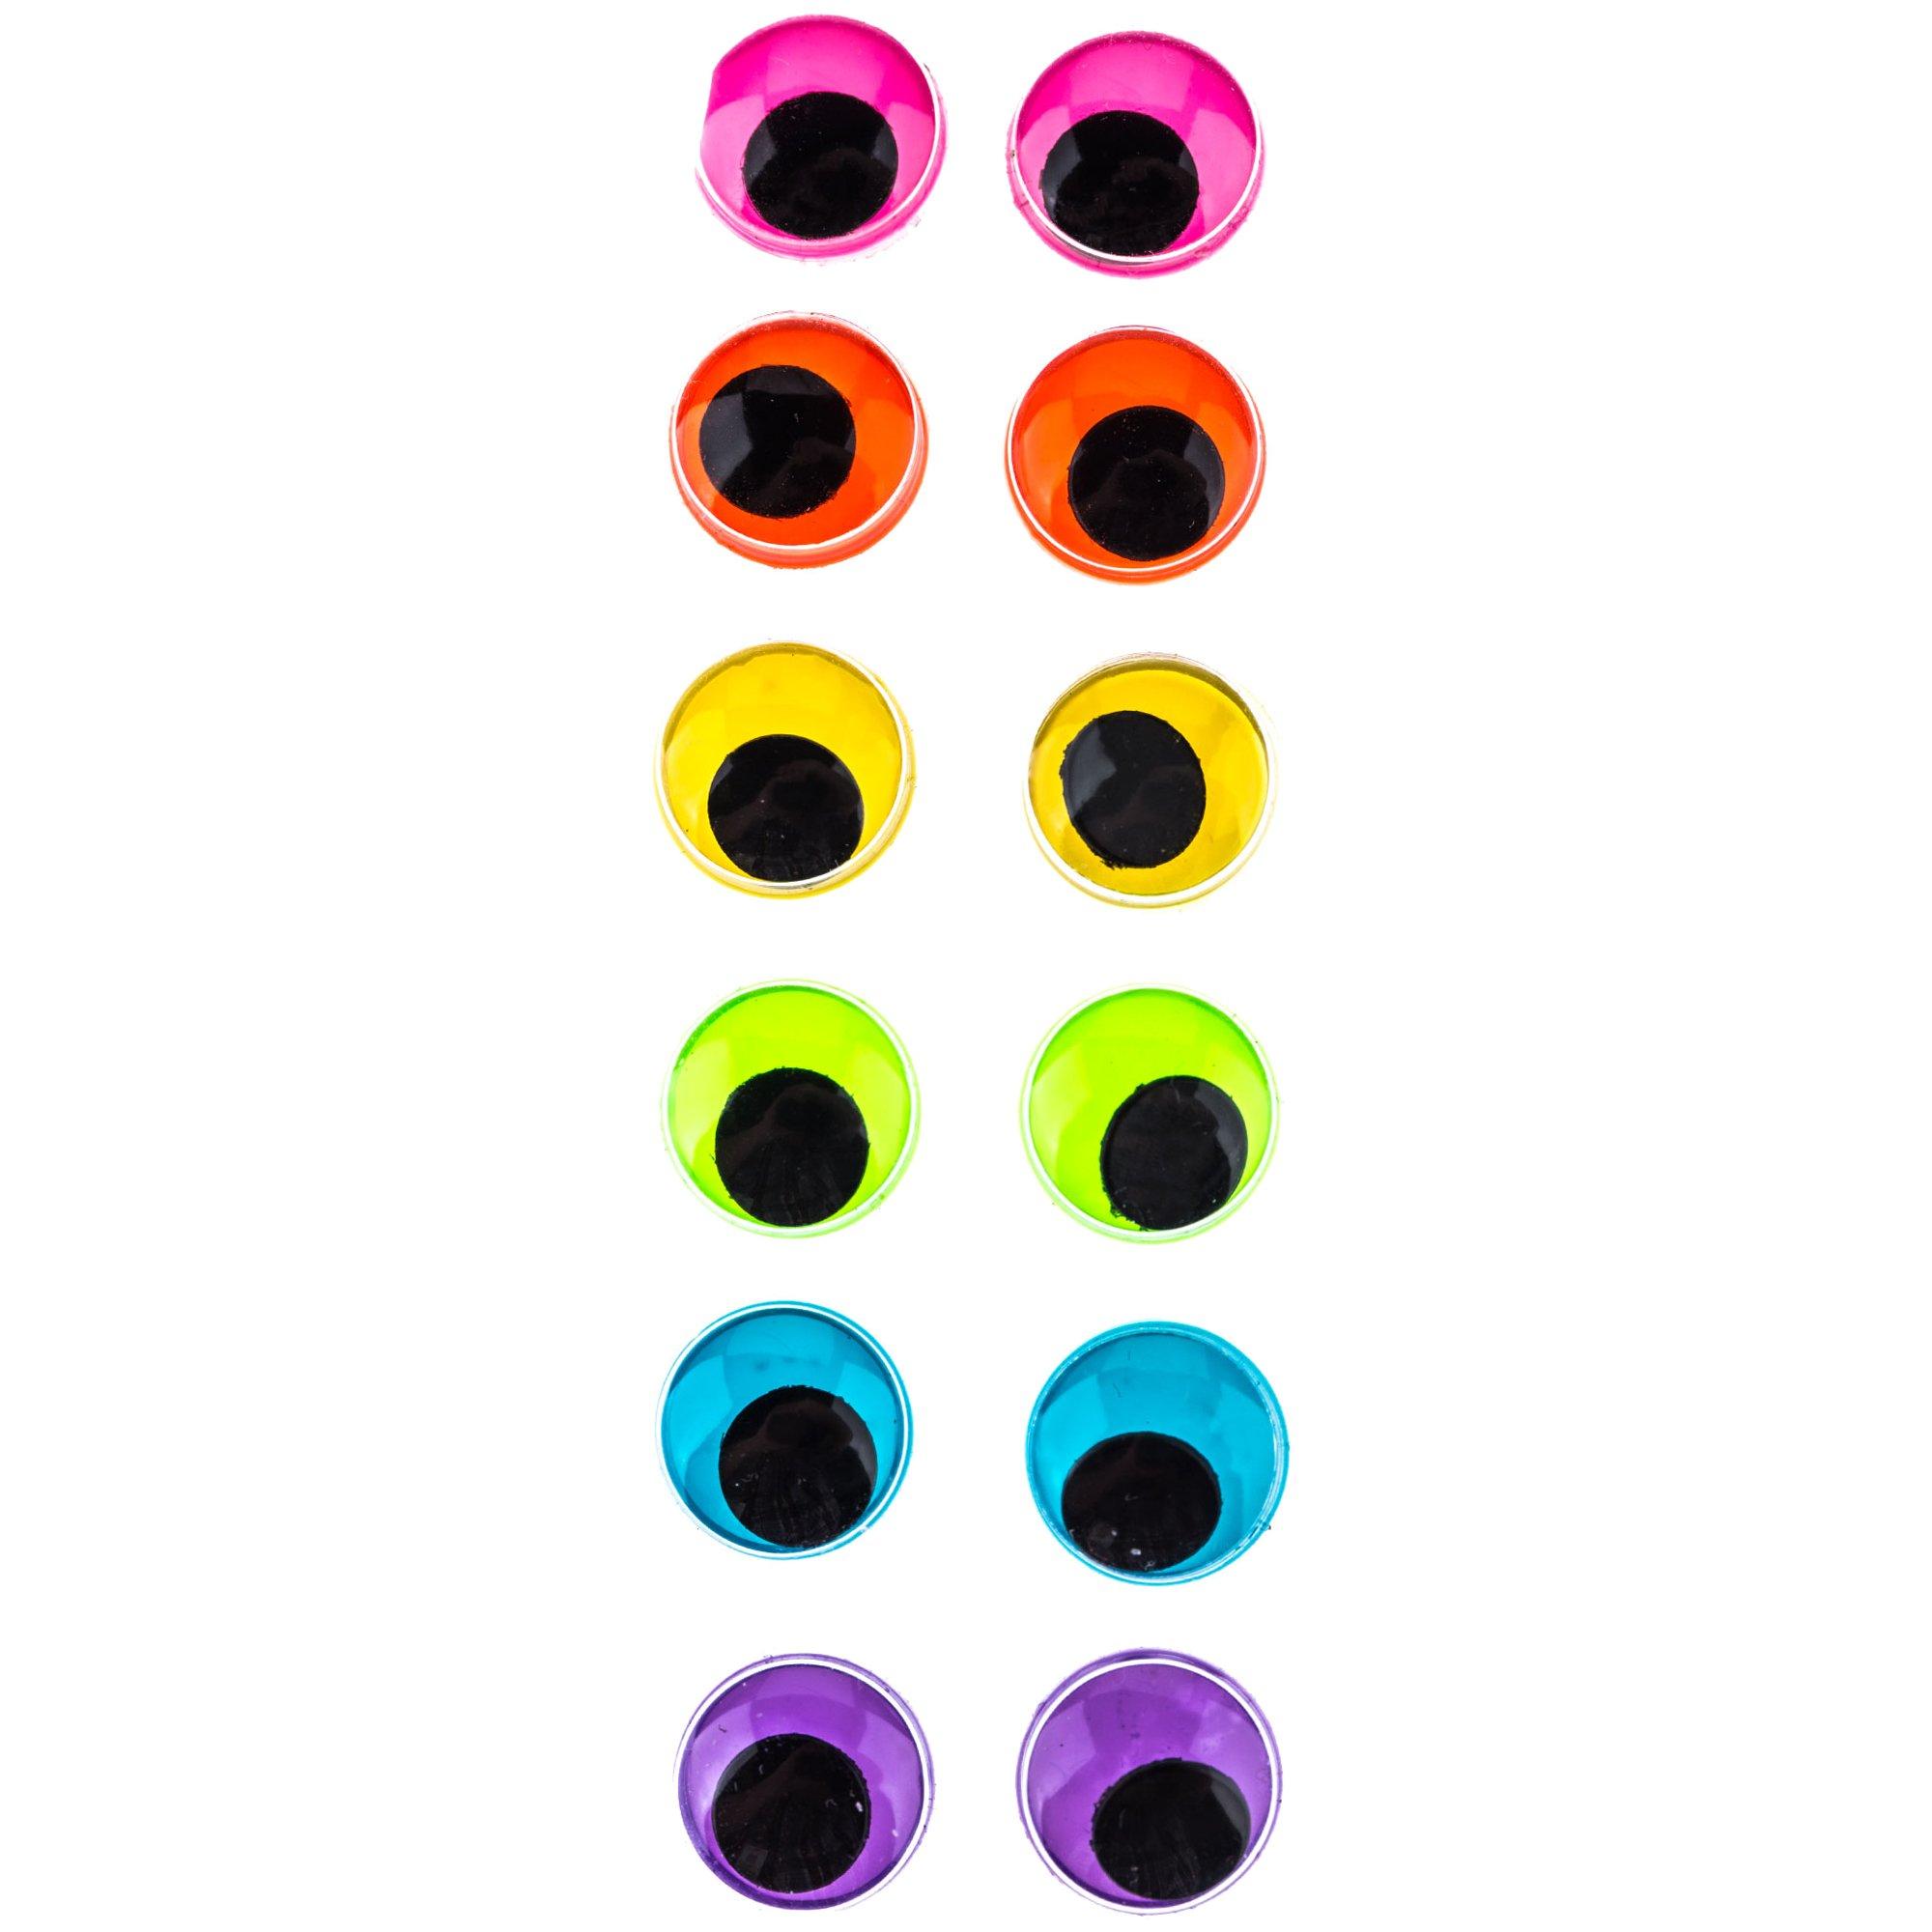 Not Self-adhesive Wiggle eyes 4mm-30mm Dolls Eye DIY Craft Googly Black Eyes  Used For